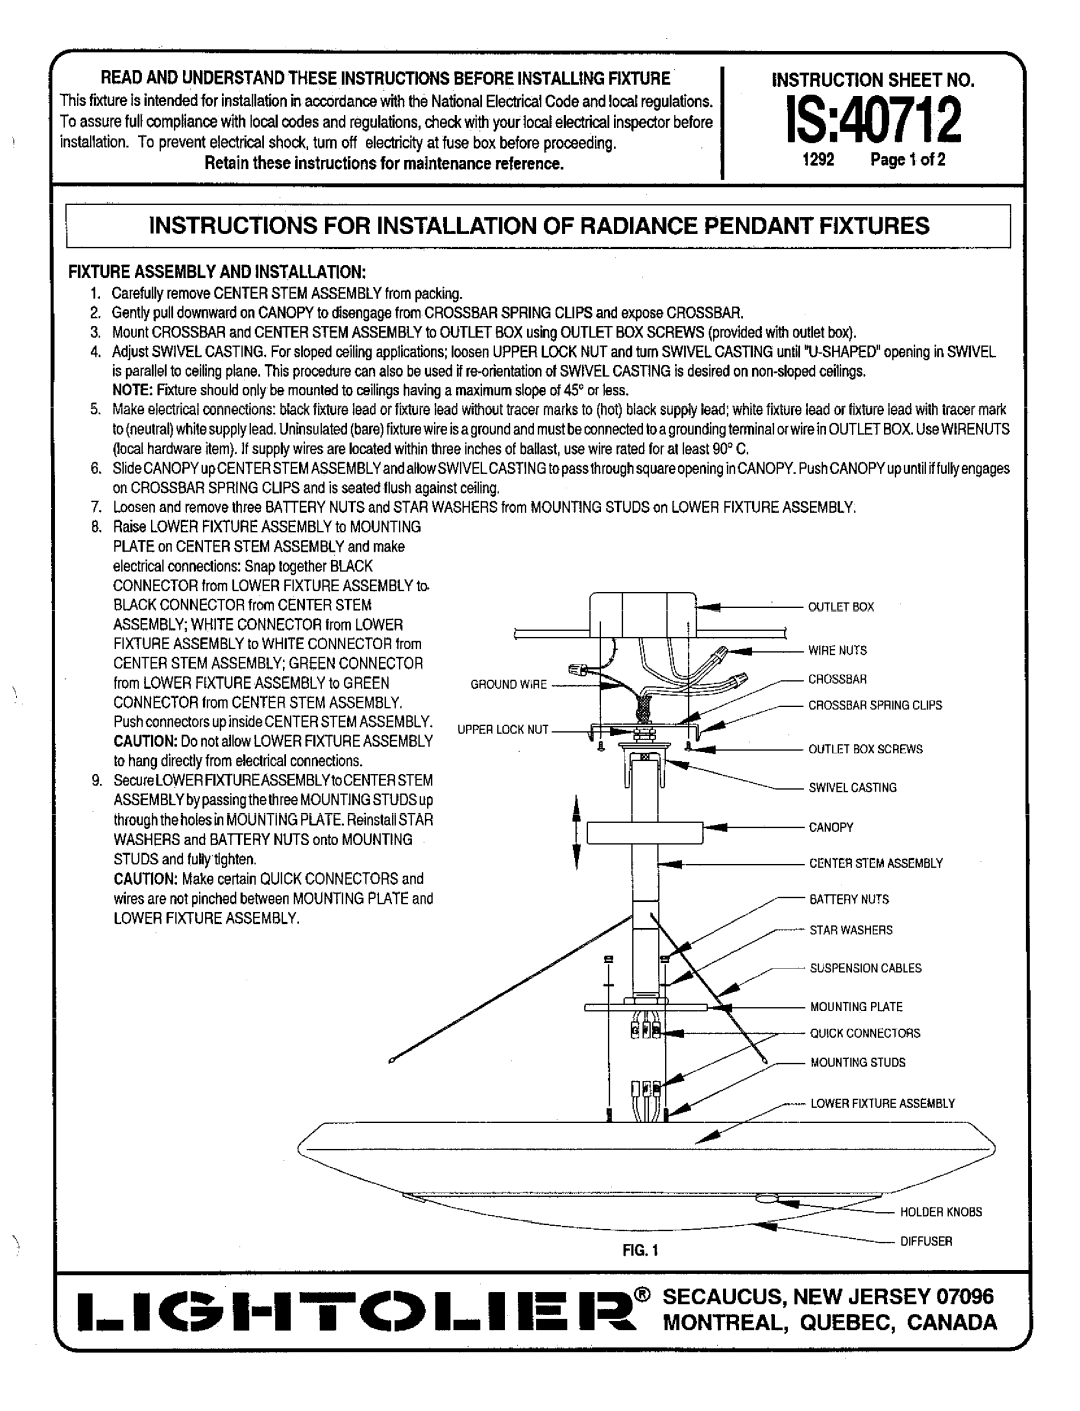 Lightolier IS:40712 instruction sheet Instruction Sheet No, 1292, Fixtureassemblyand Installation, Is 